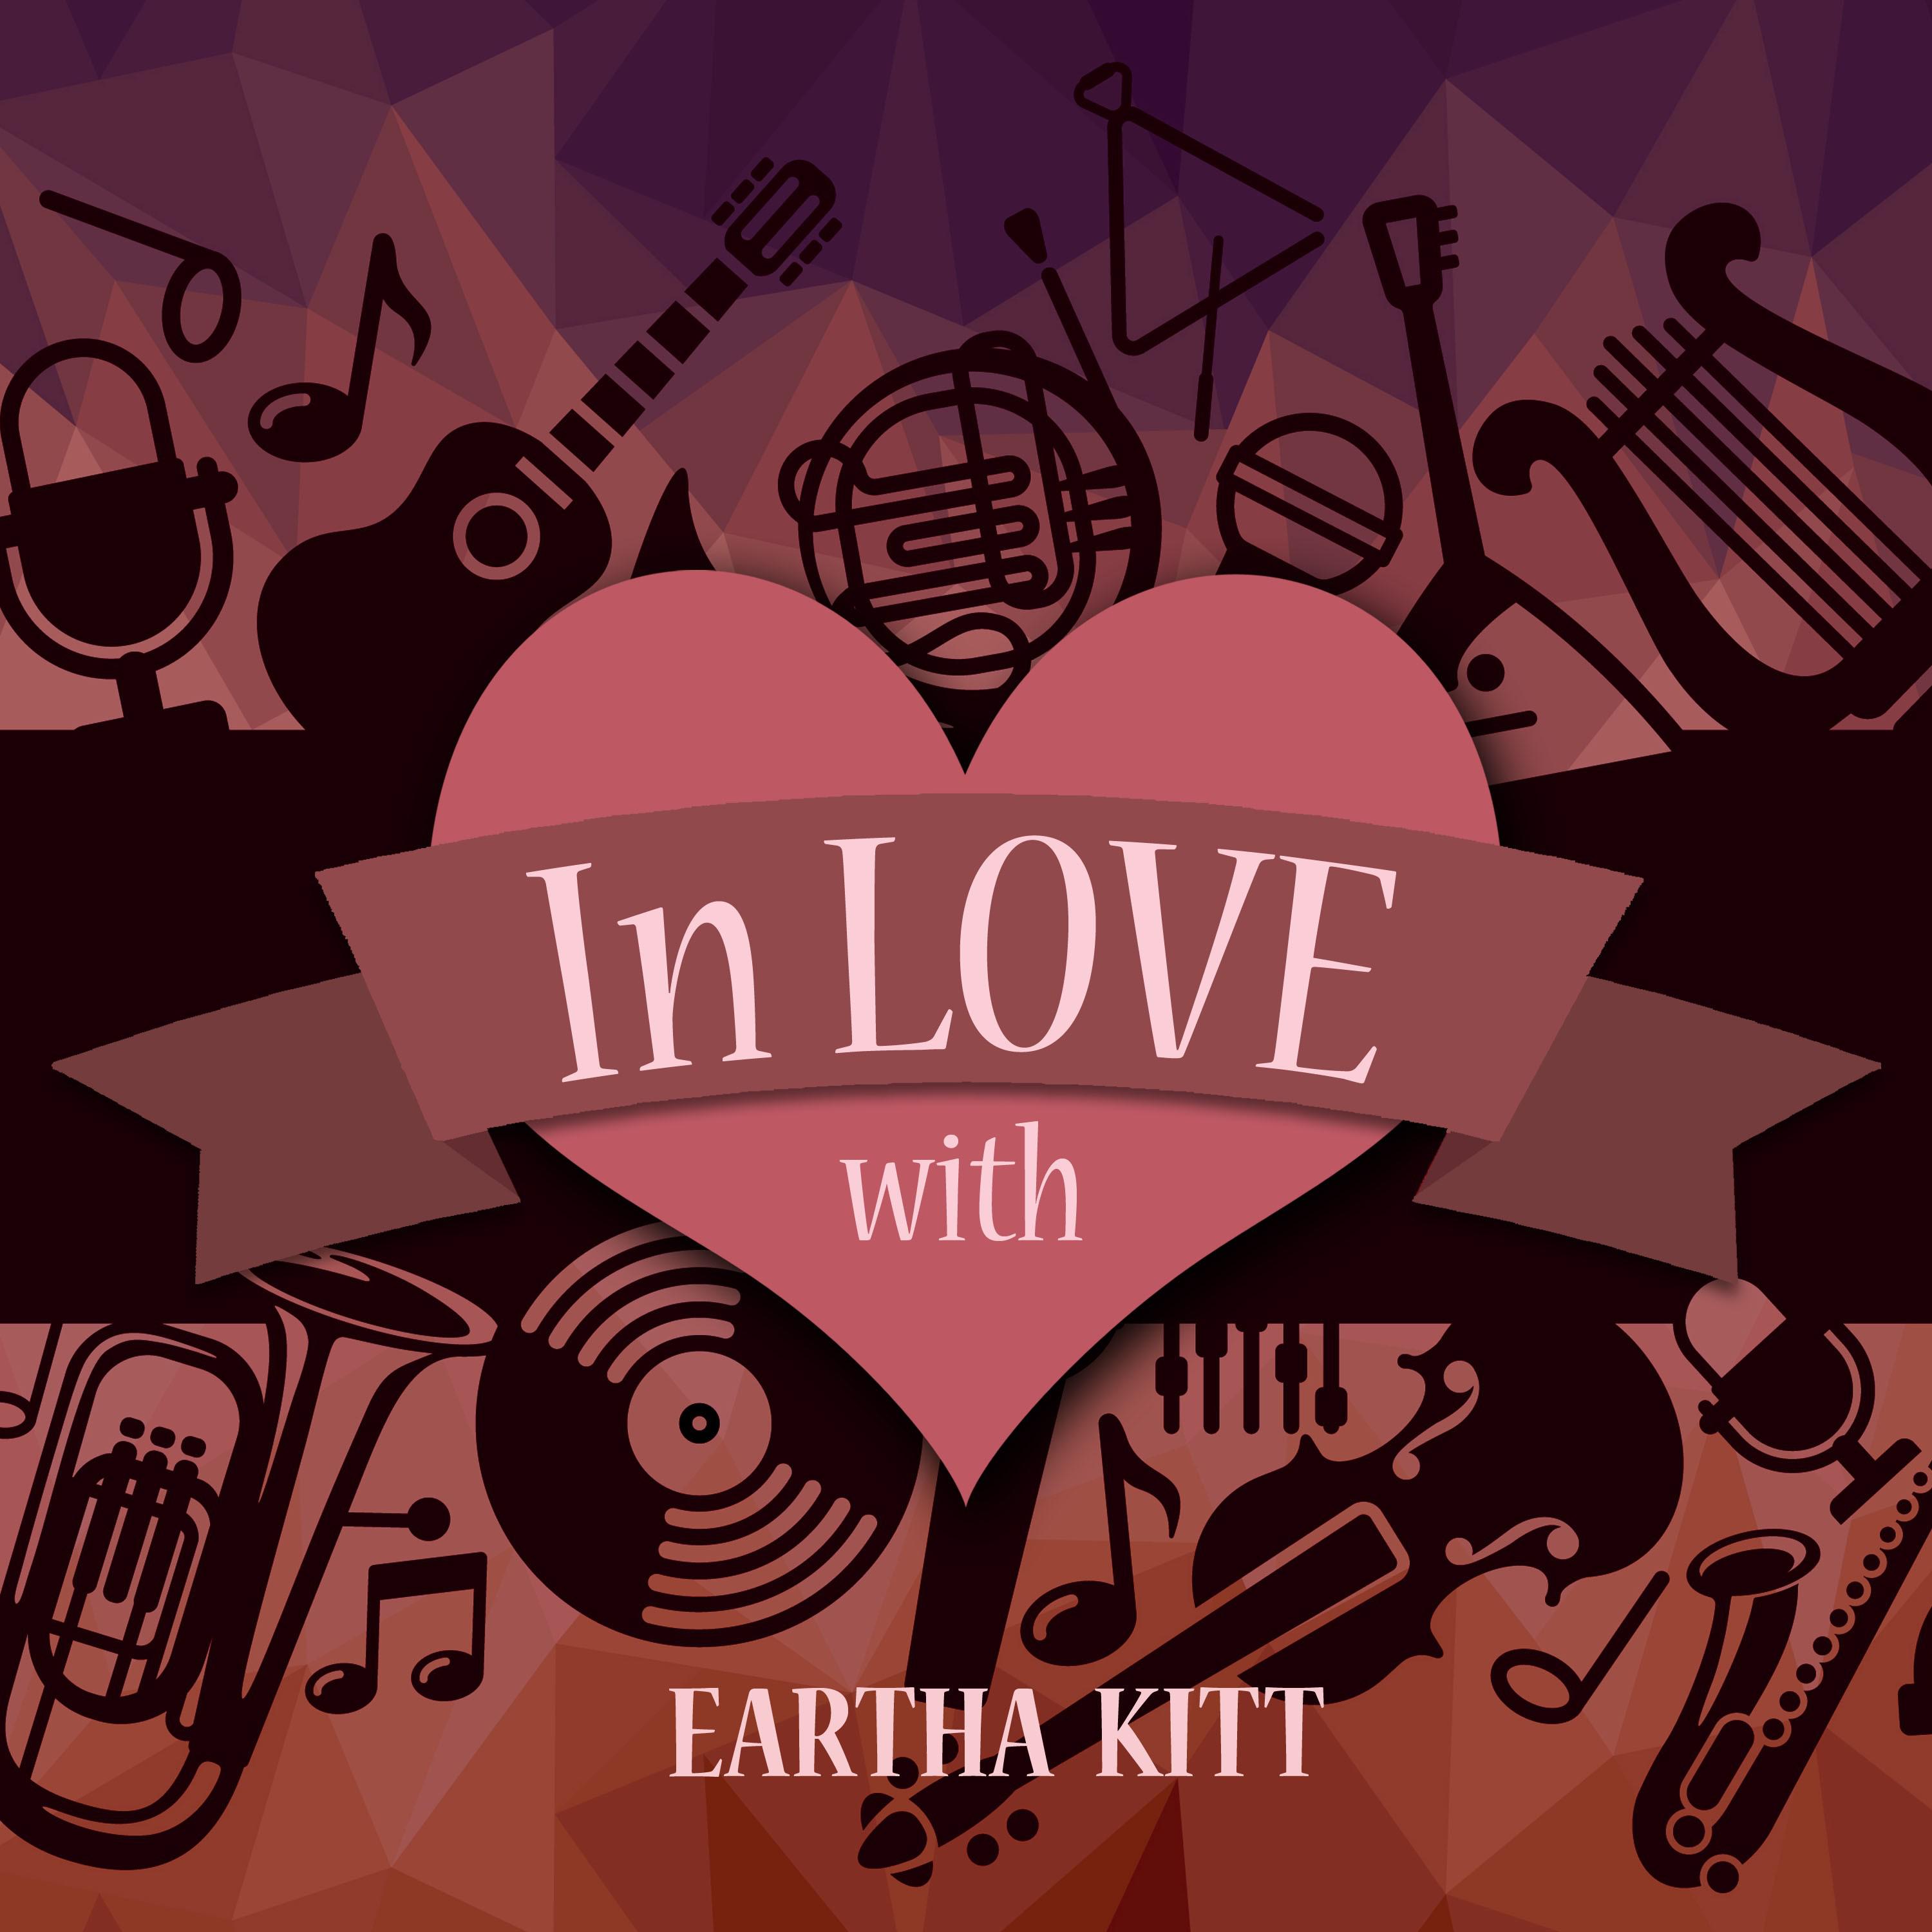 In Love with Eartha Kitt